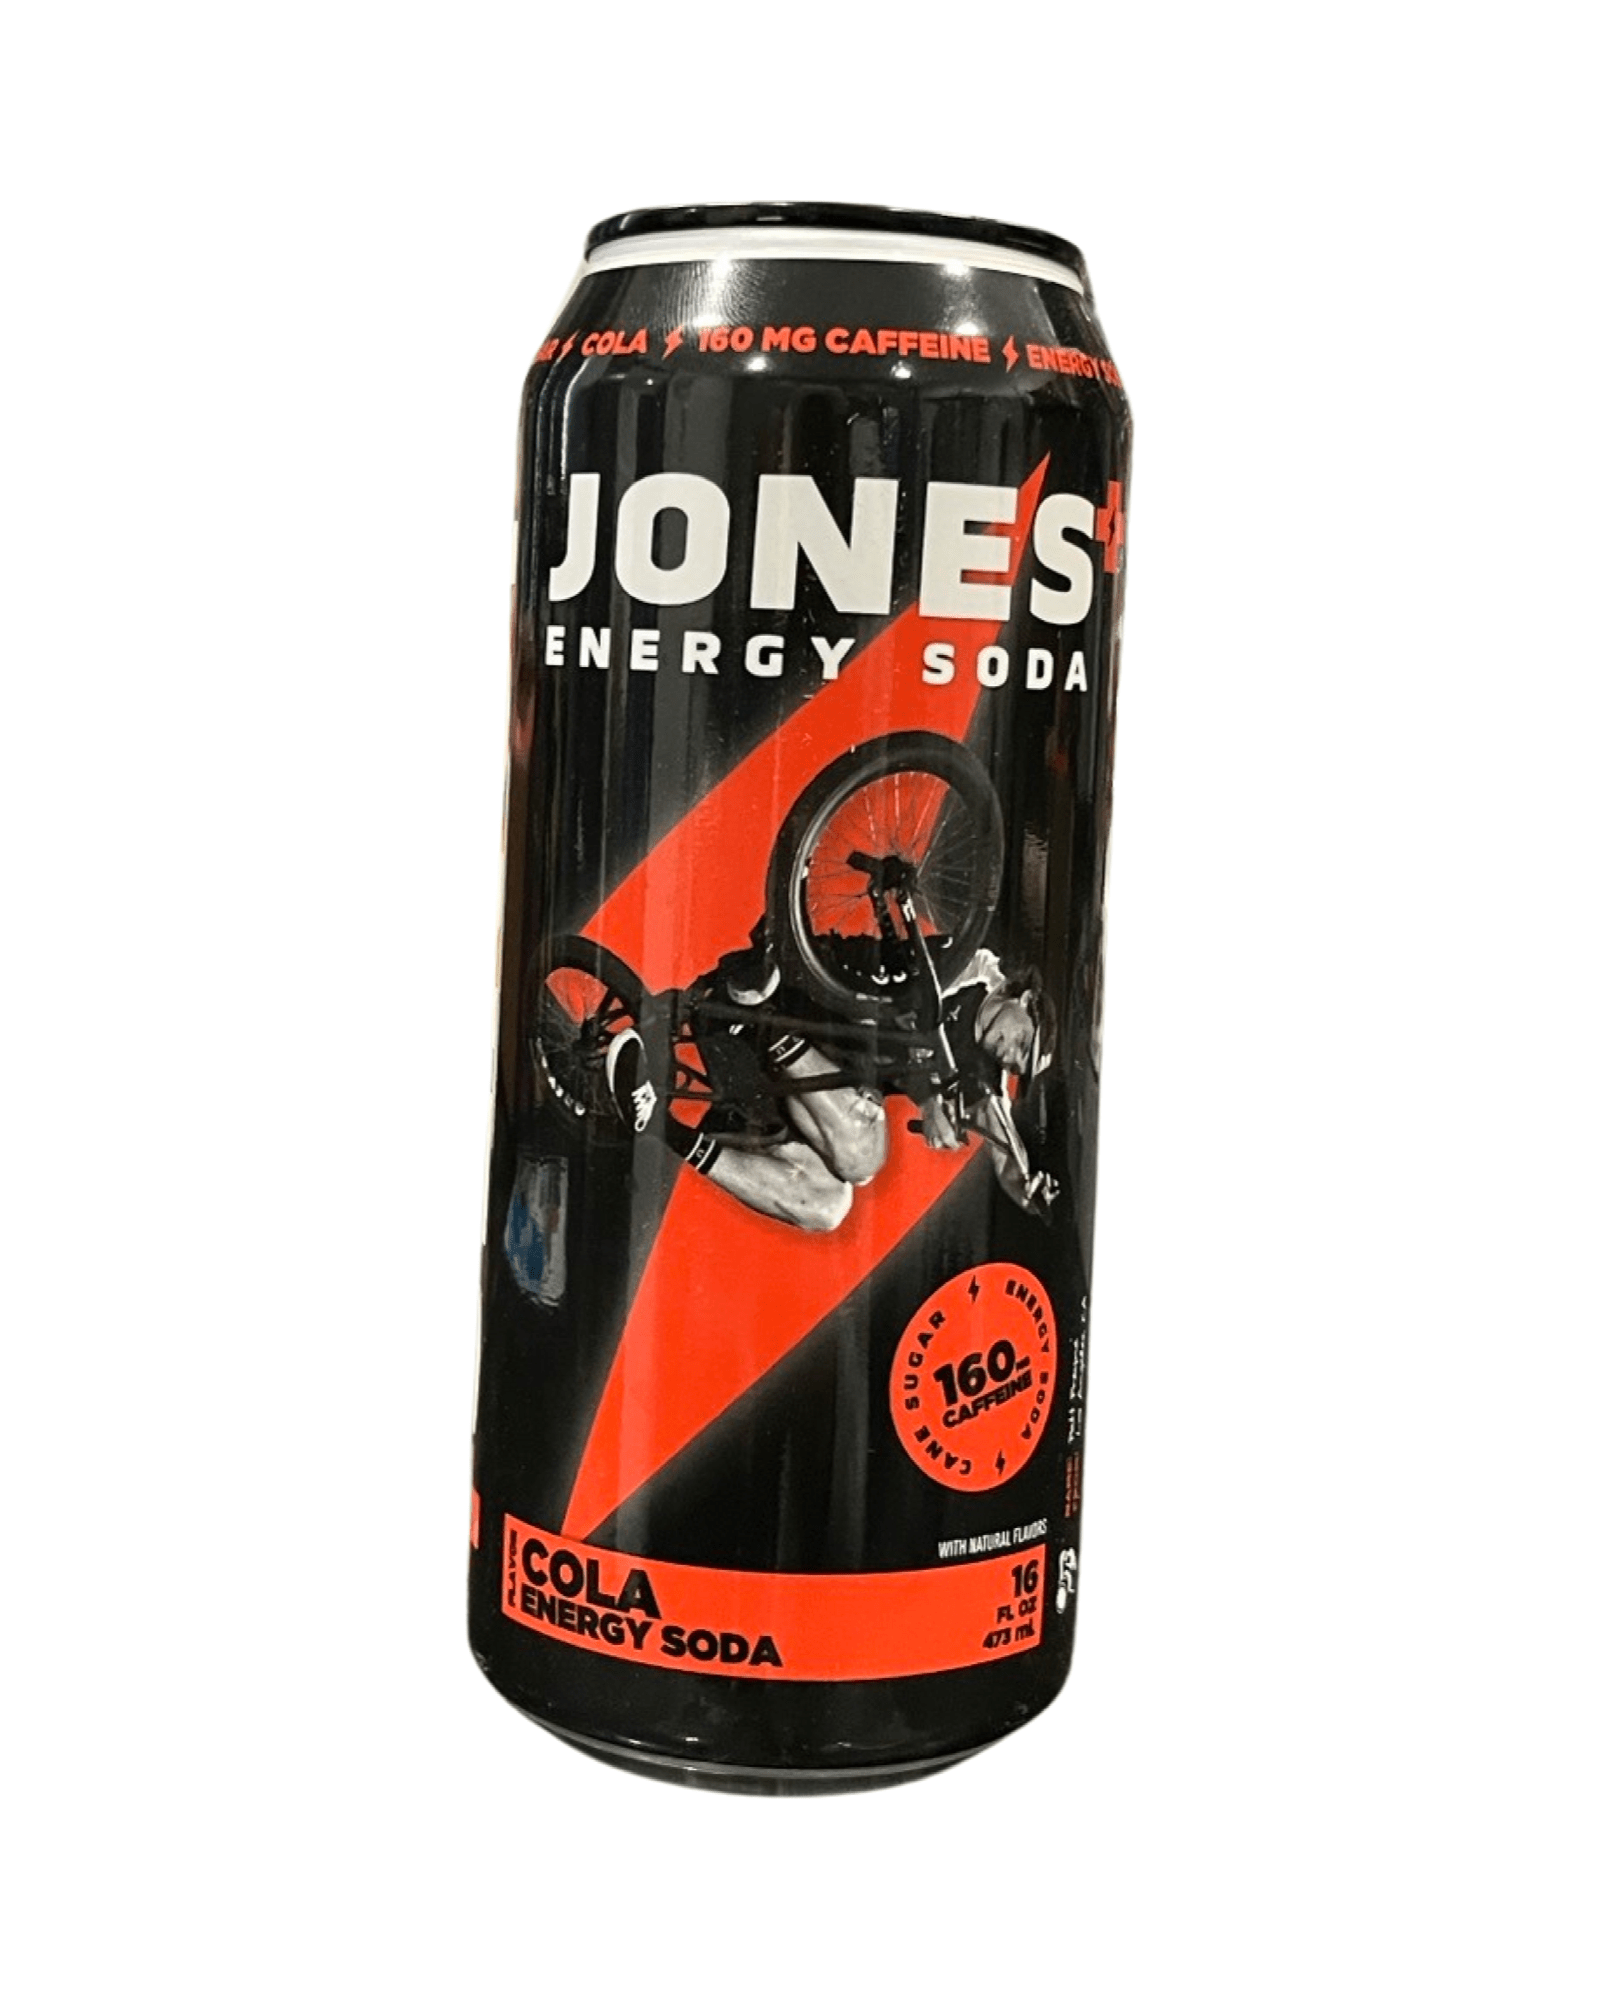 Jones Energy Soda “Cola” (Rare American) - Exotic Soda Company